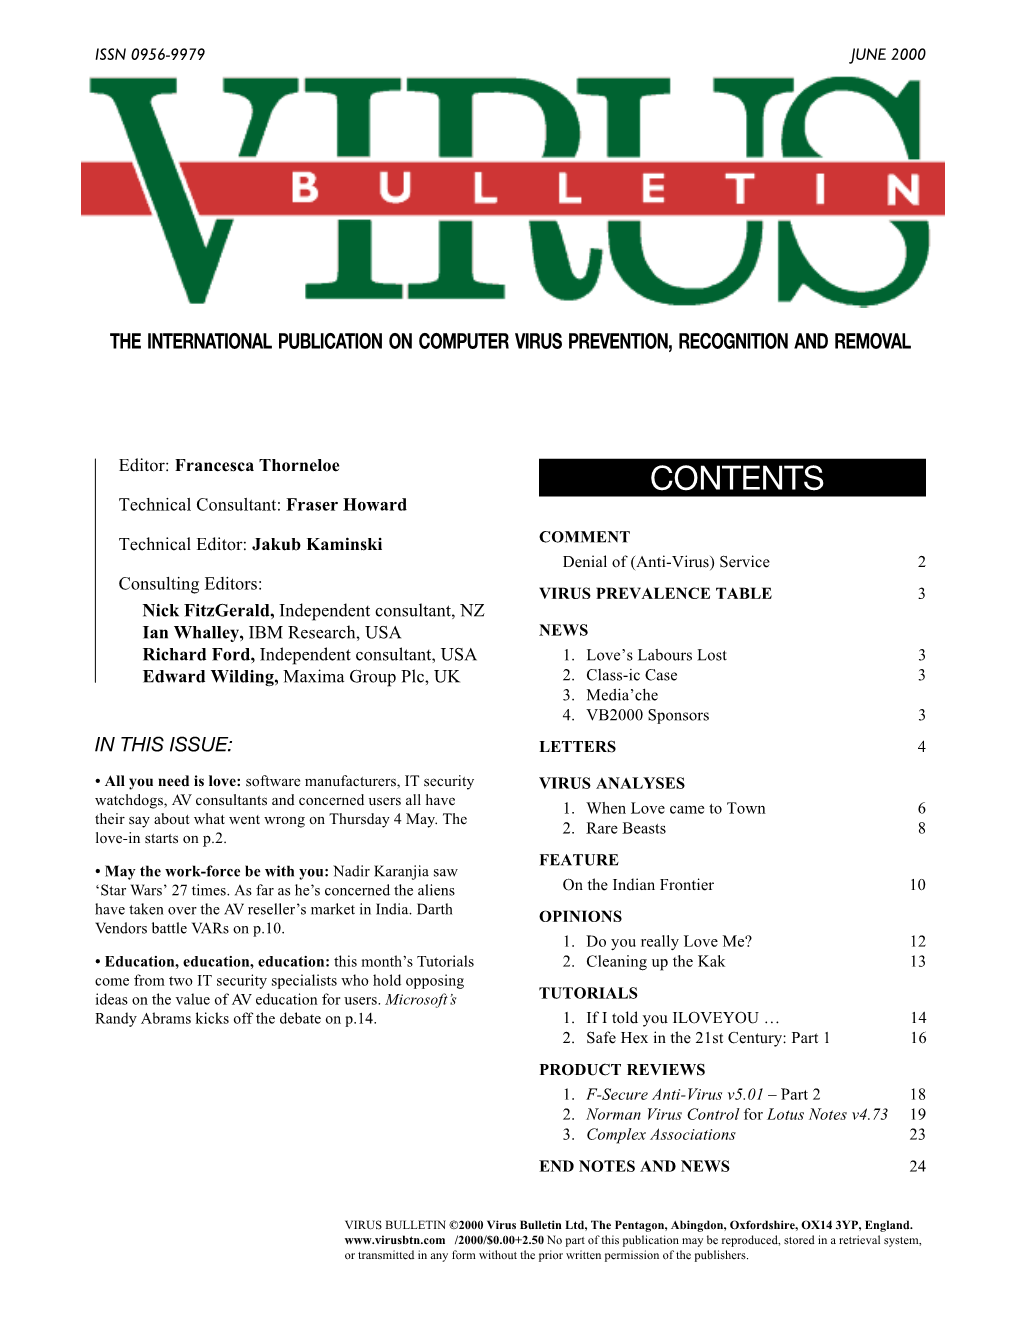 Virus Bulletin, June 2000